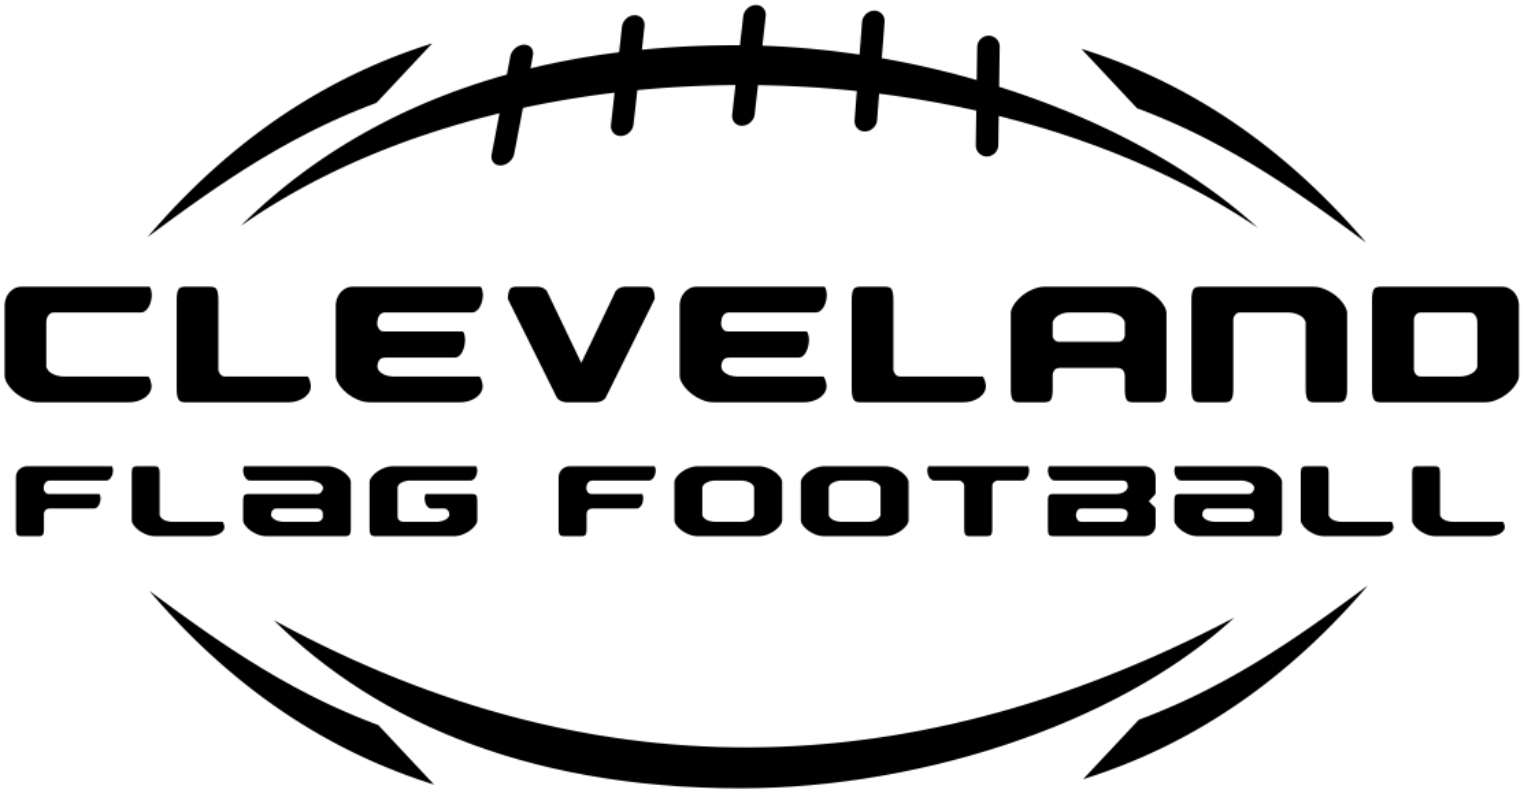 Cleveland Flag Football League logo